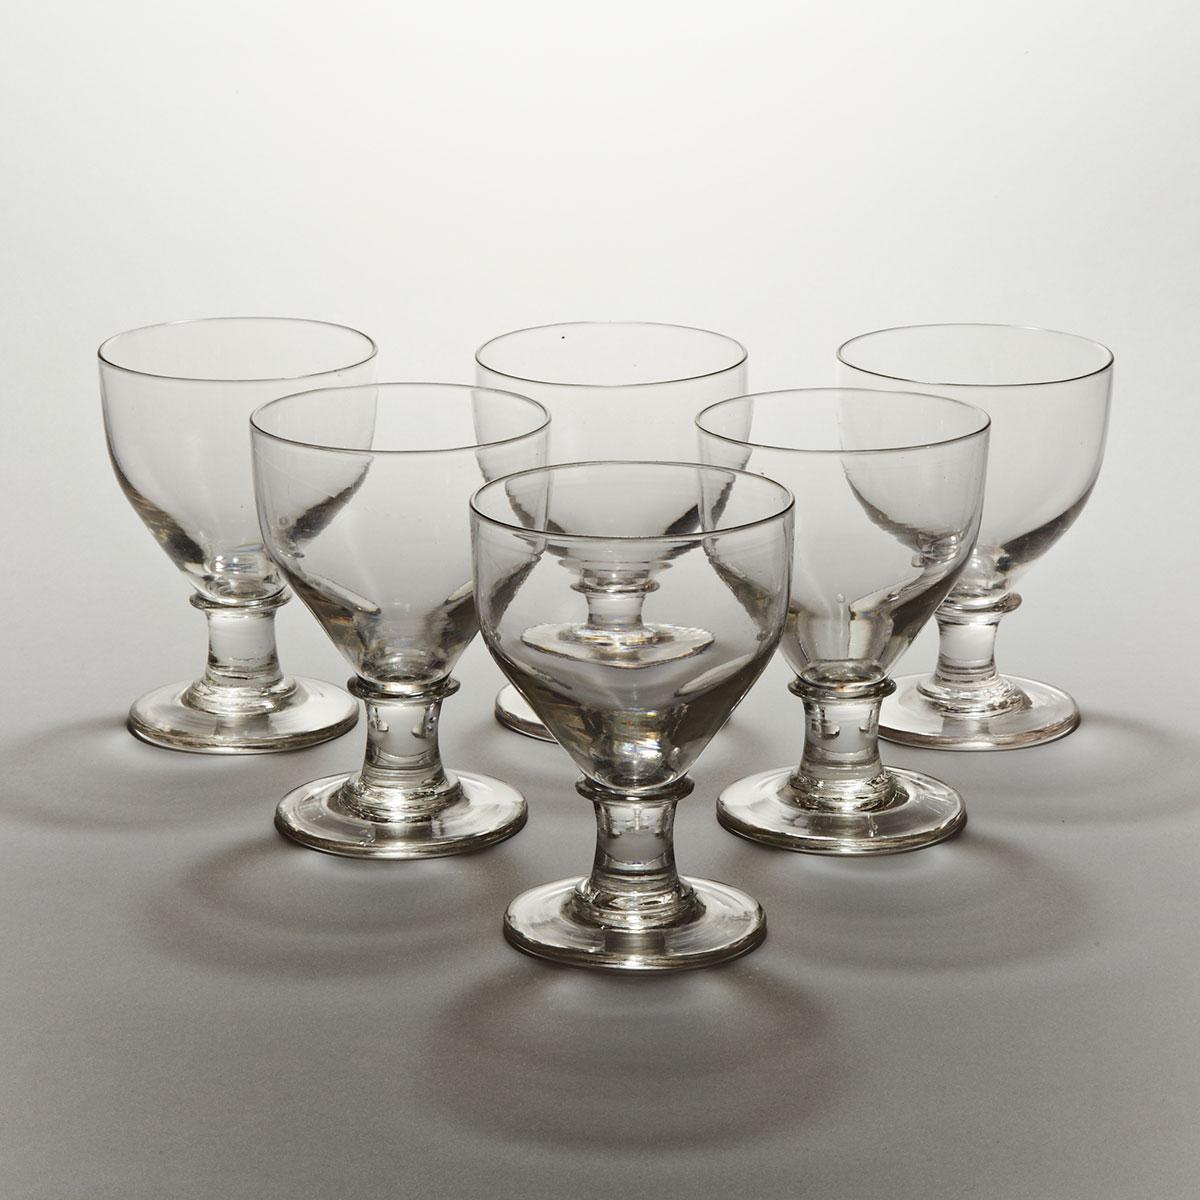 Six English Glass Rummers, 19th century